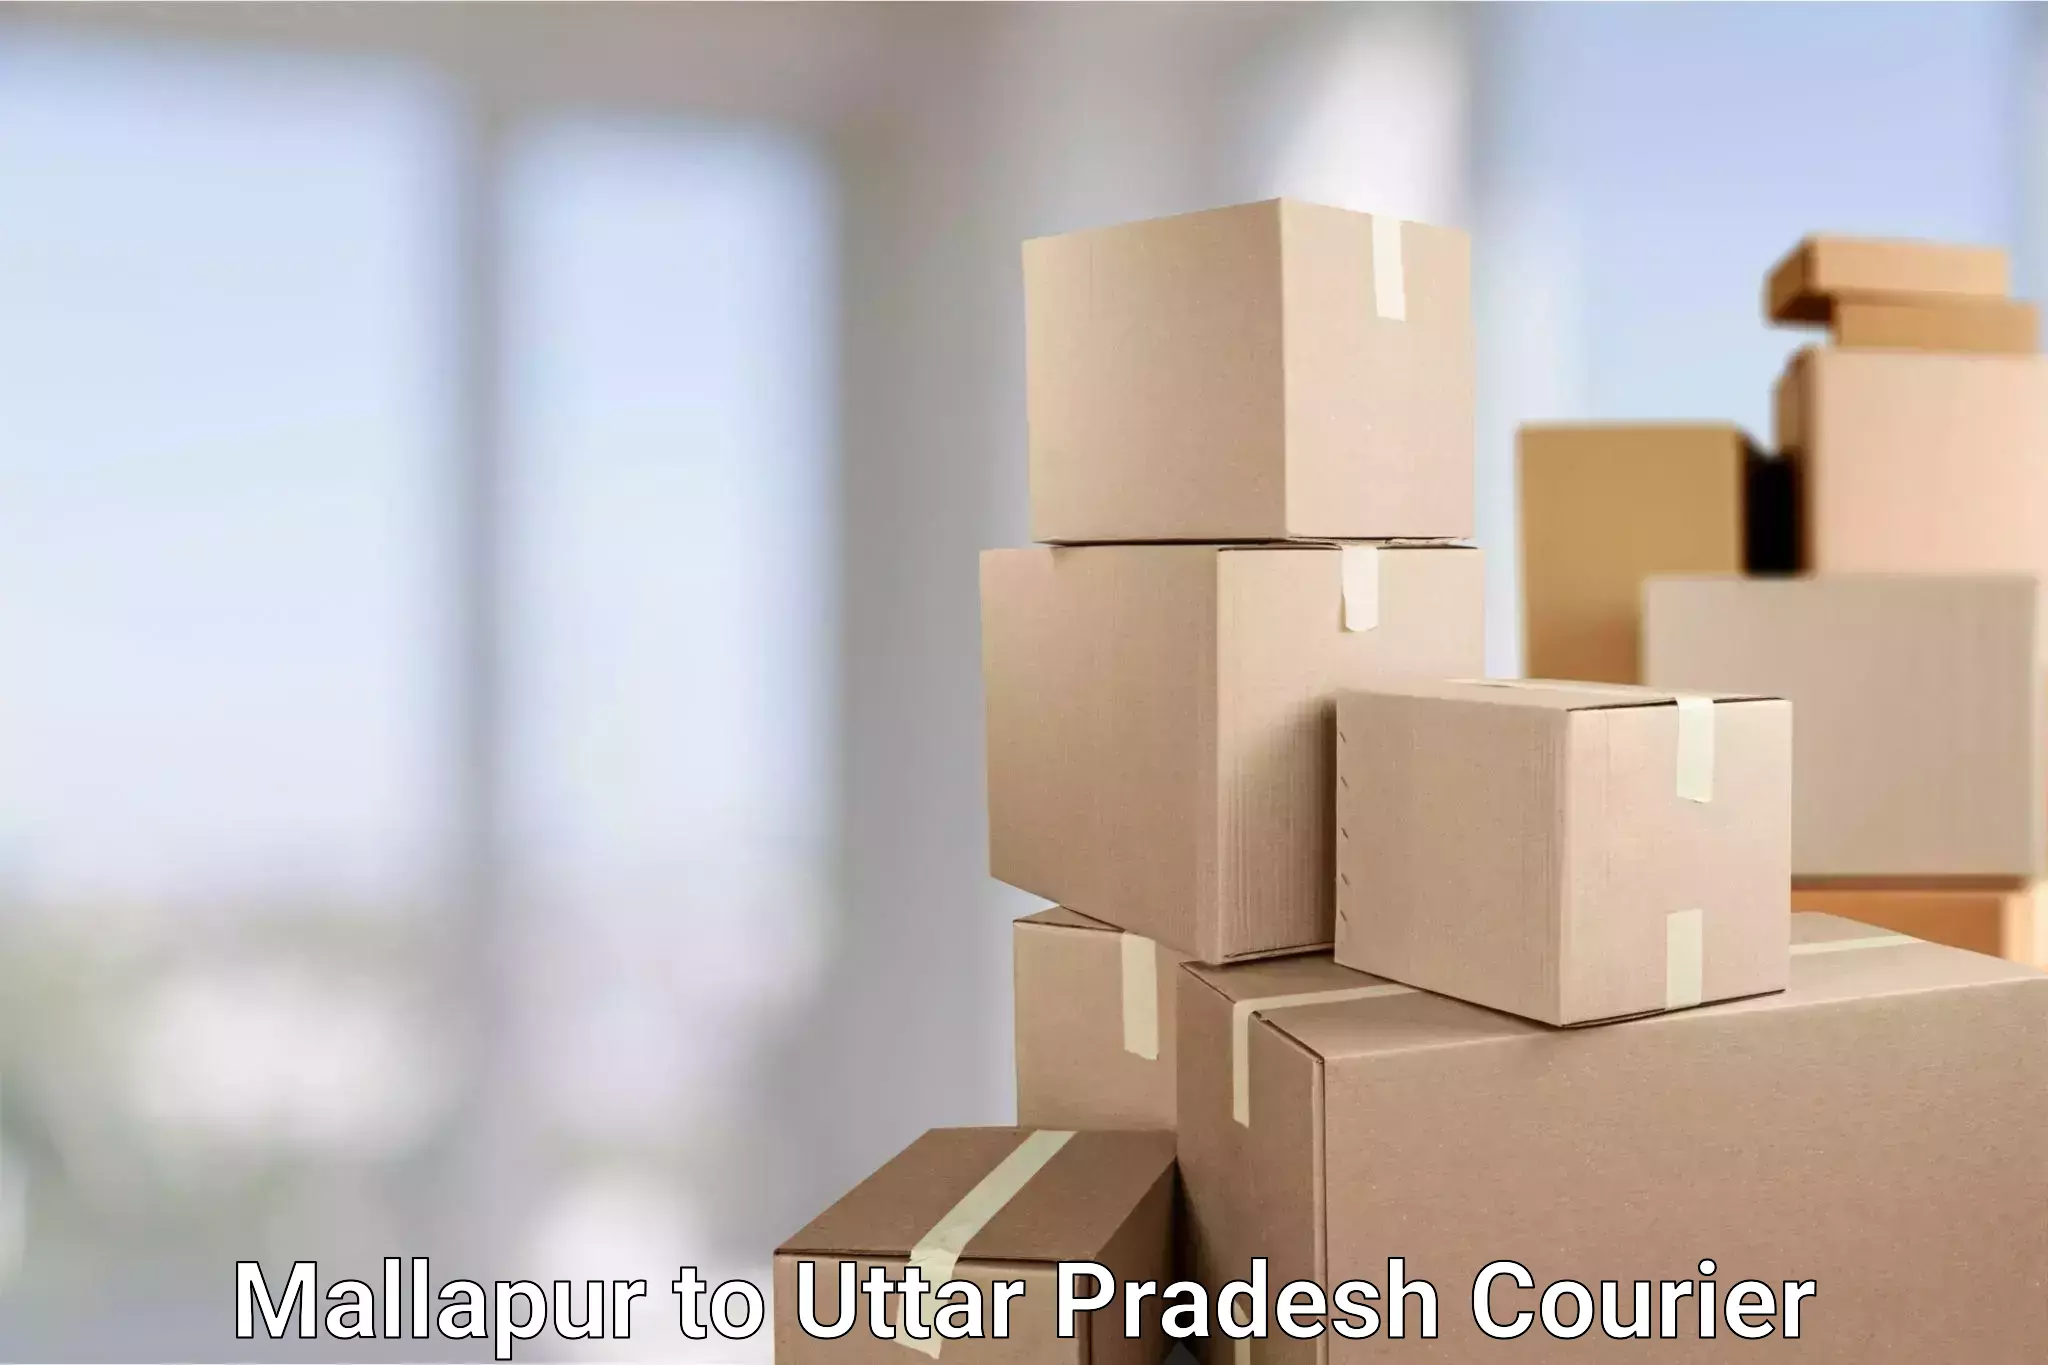 24-hour courier services in Mallapur to Ambedkar Nagar